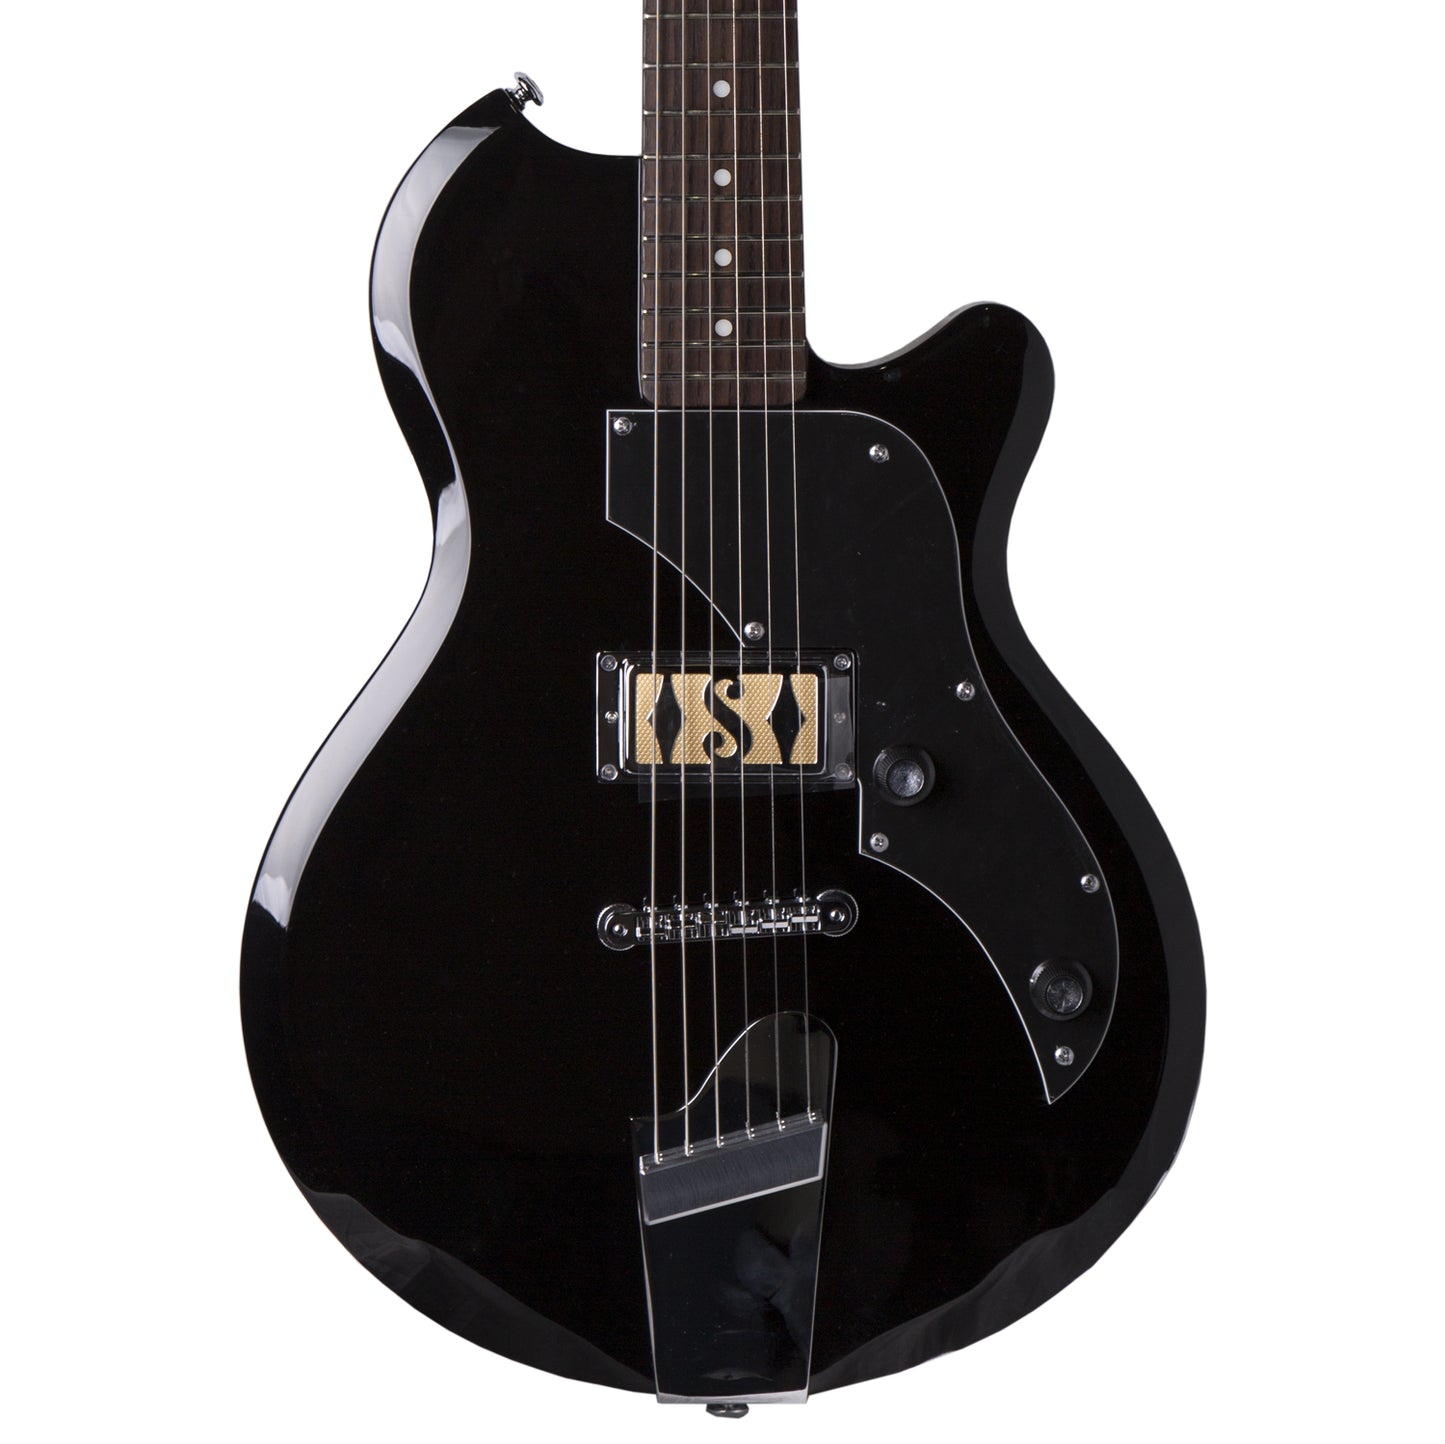 Supro Jamesport Single Pickup Solid Body Electric Guitar in Jet Black